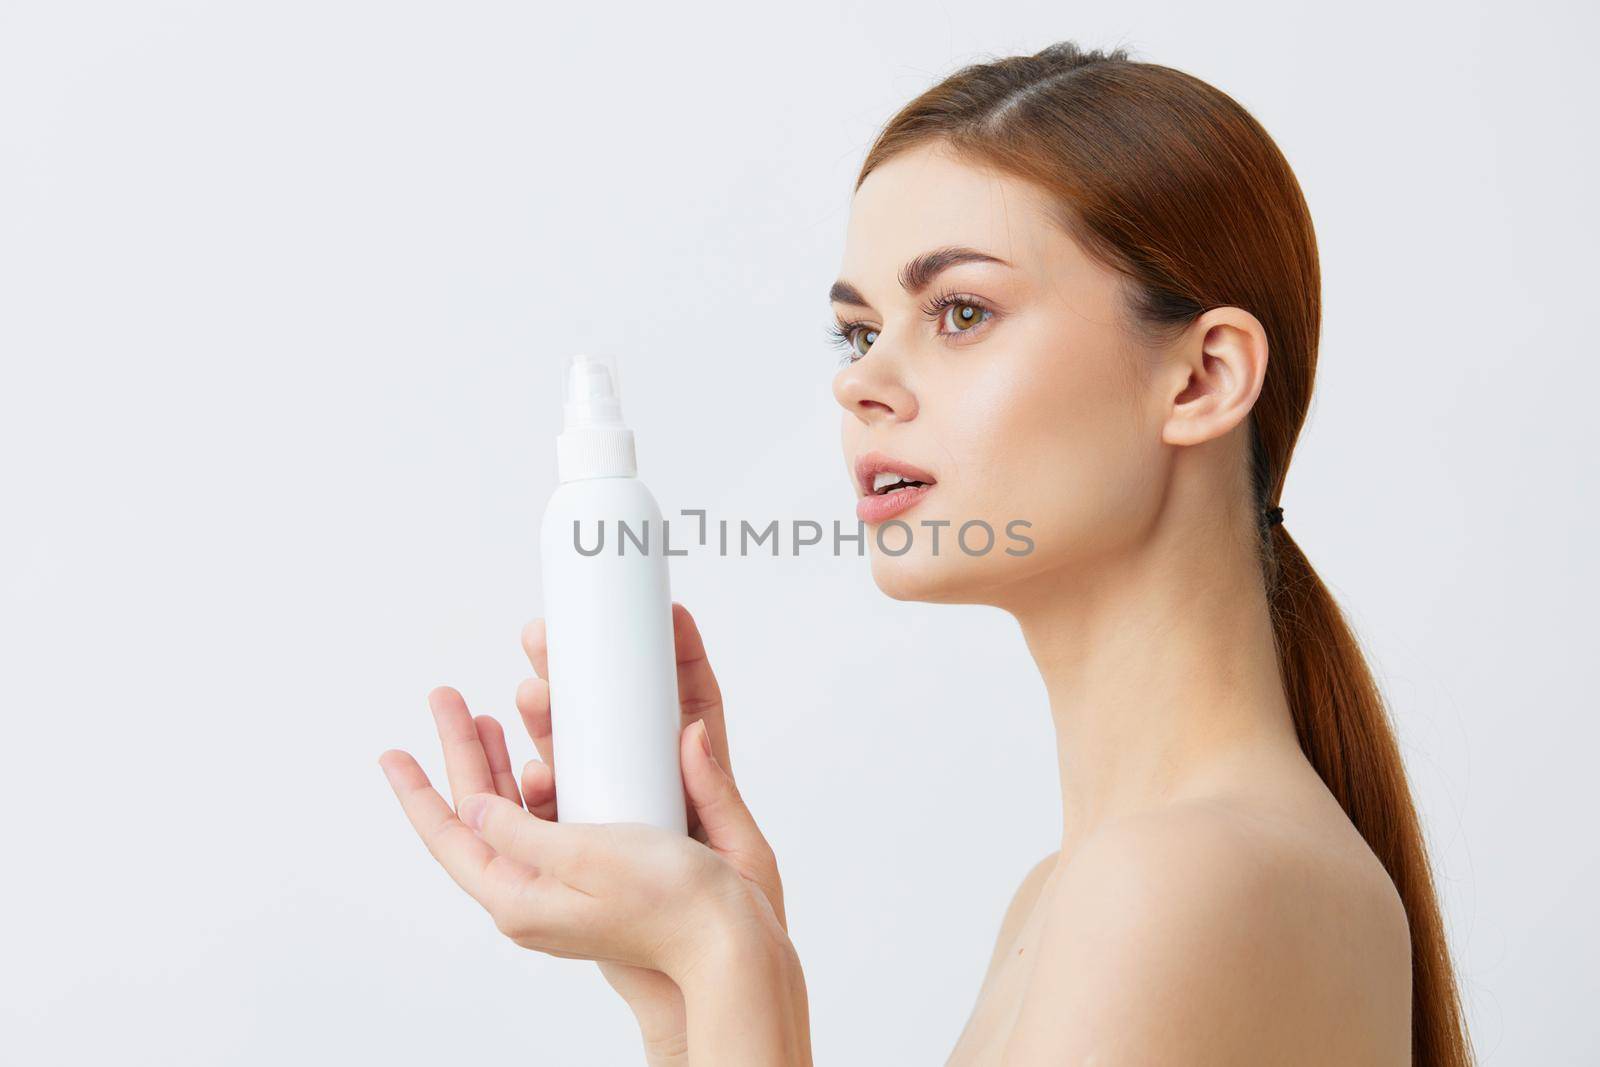 woman body lotion rejuvenation cosmetics close-up Lifestyle. High quality photo